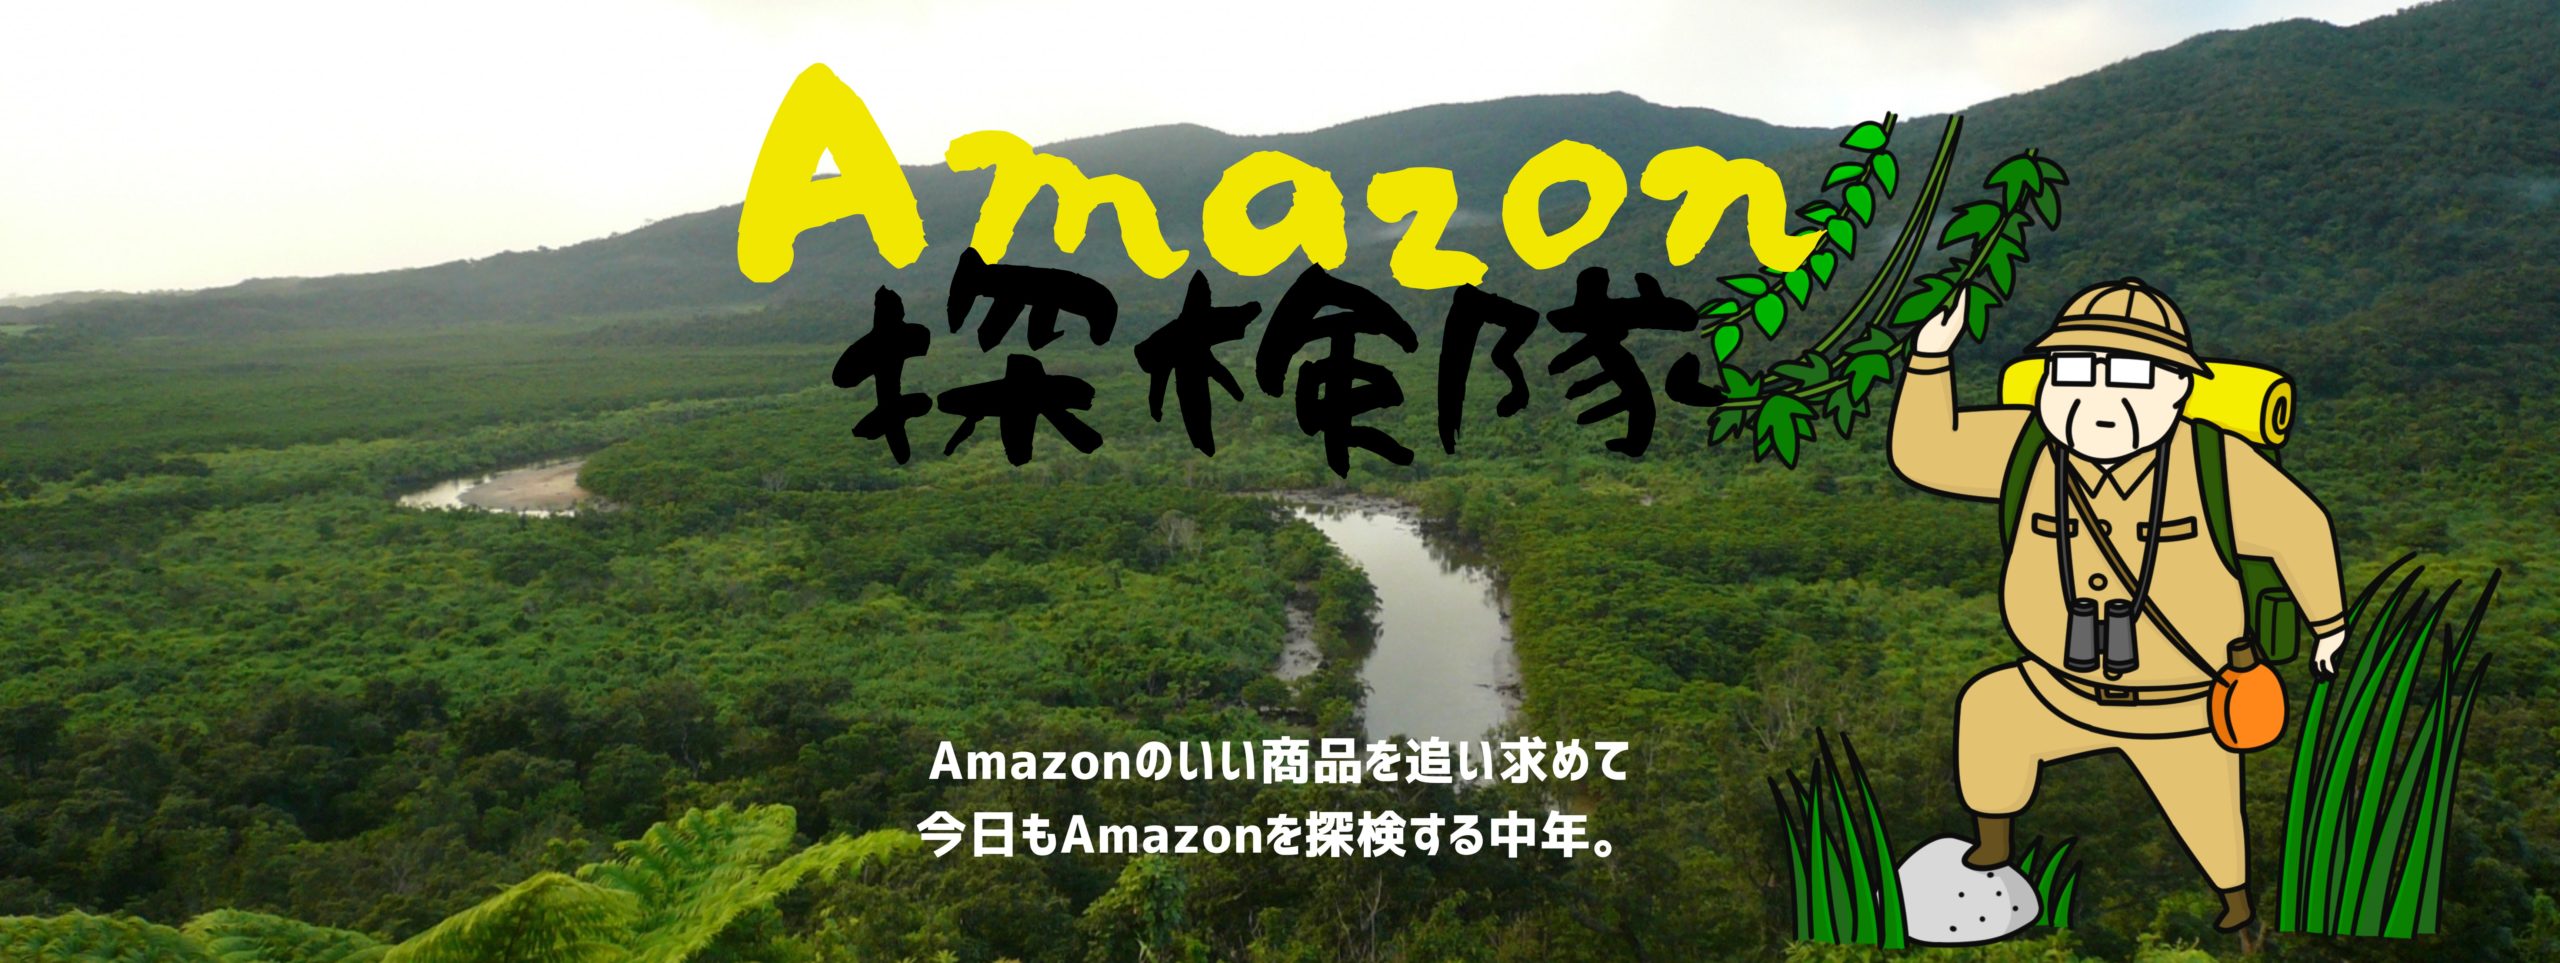 Amazon探検隊